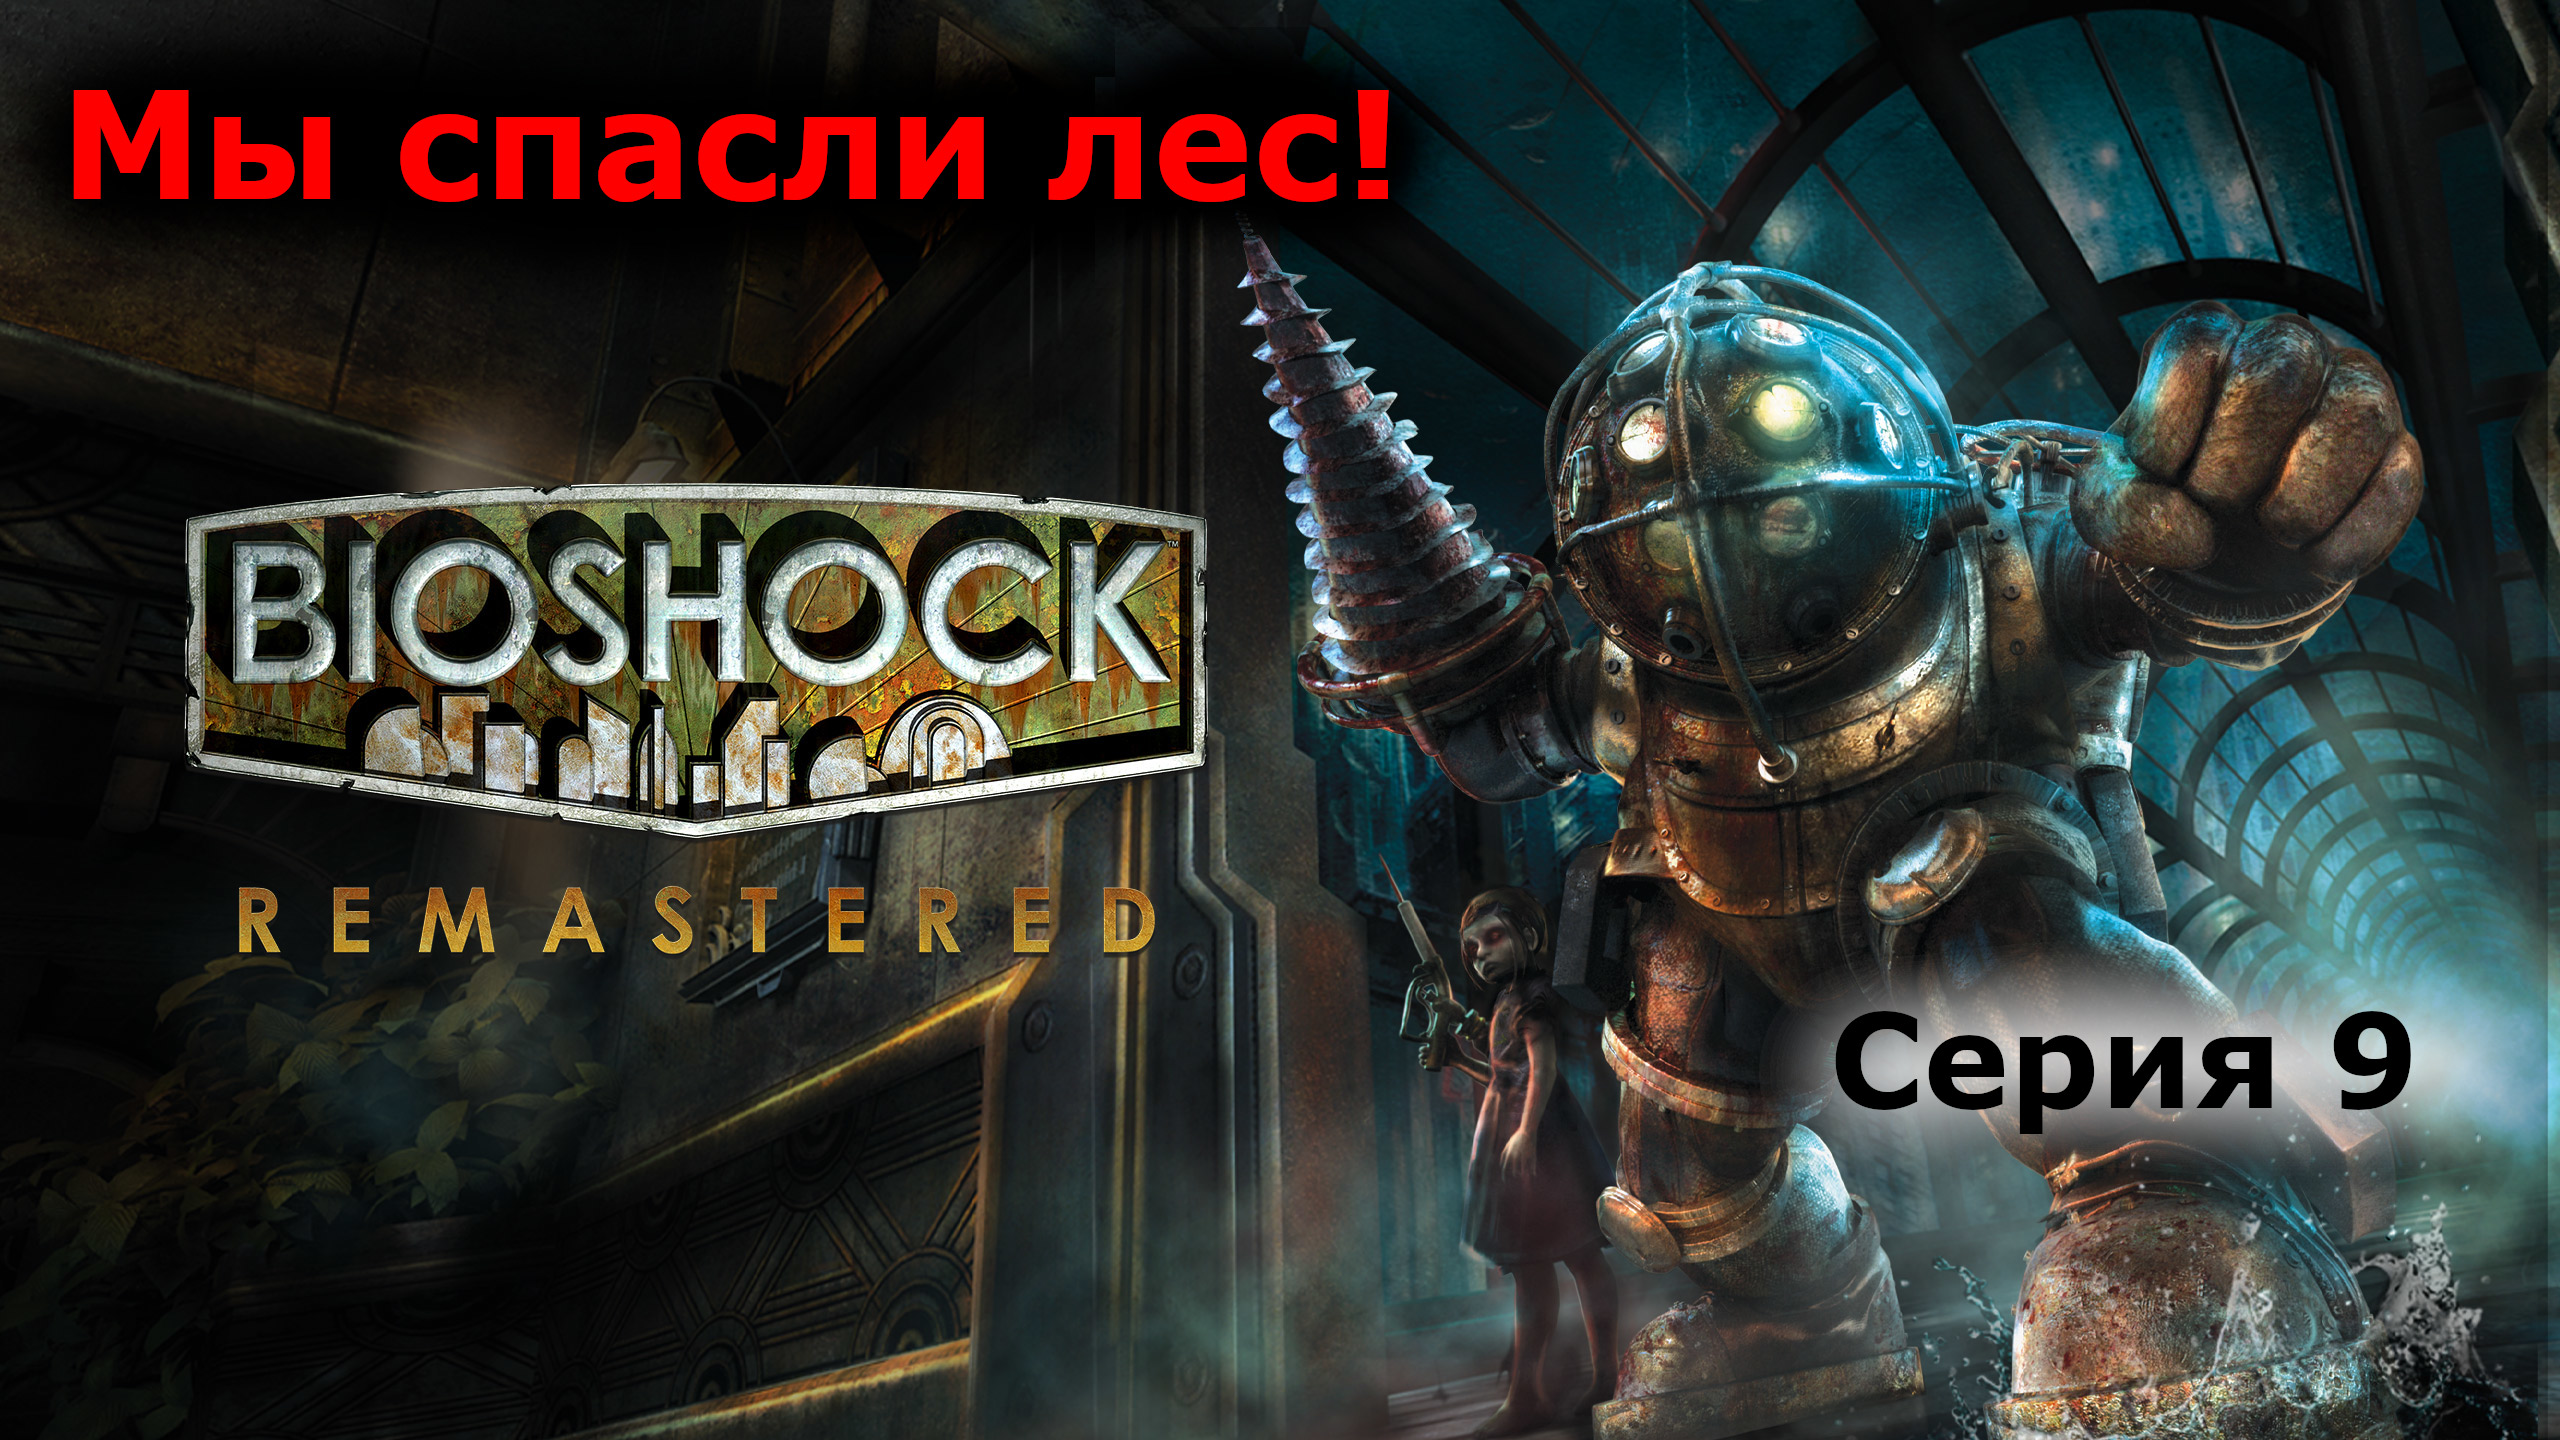 Игры в скором времени. Bioshock 2 Remastered. Bioshock 3 Remastered. Биошок 1 Ремастеред. Bioshock 1 Remastered.